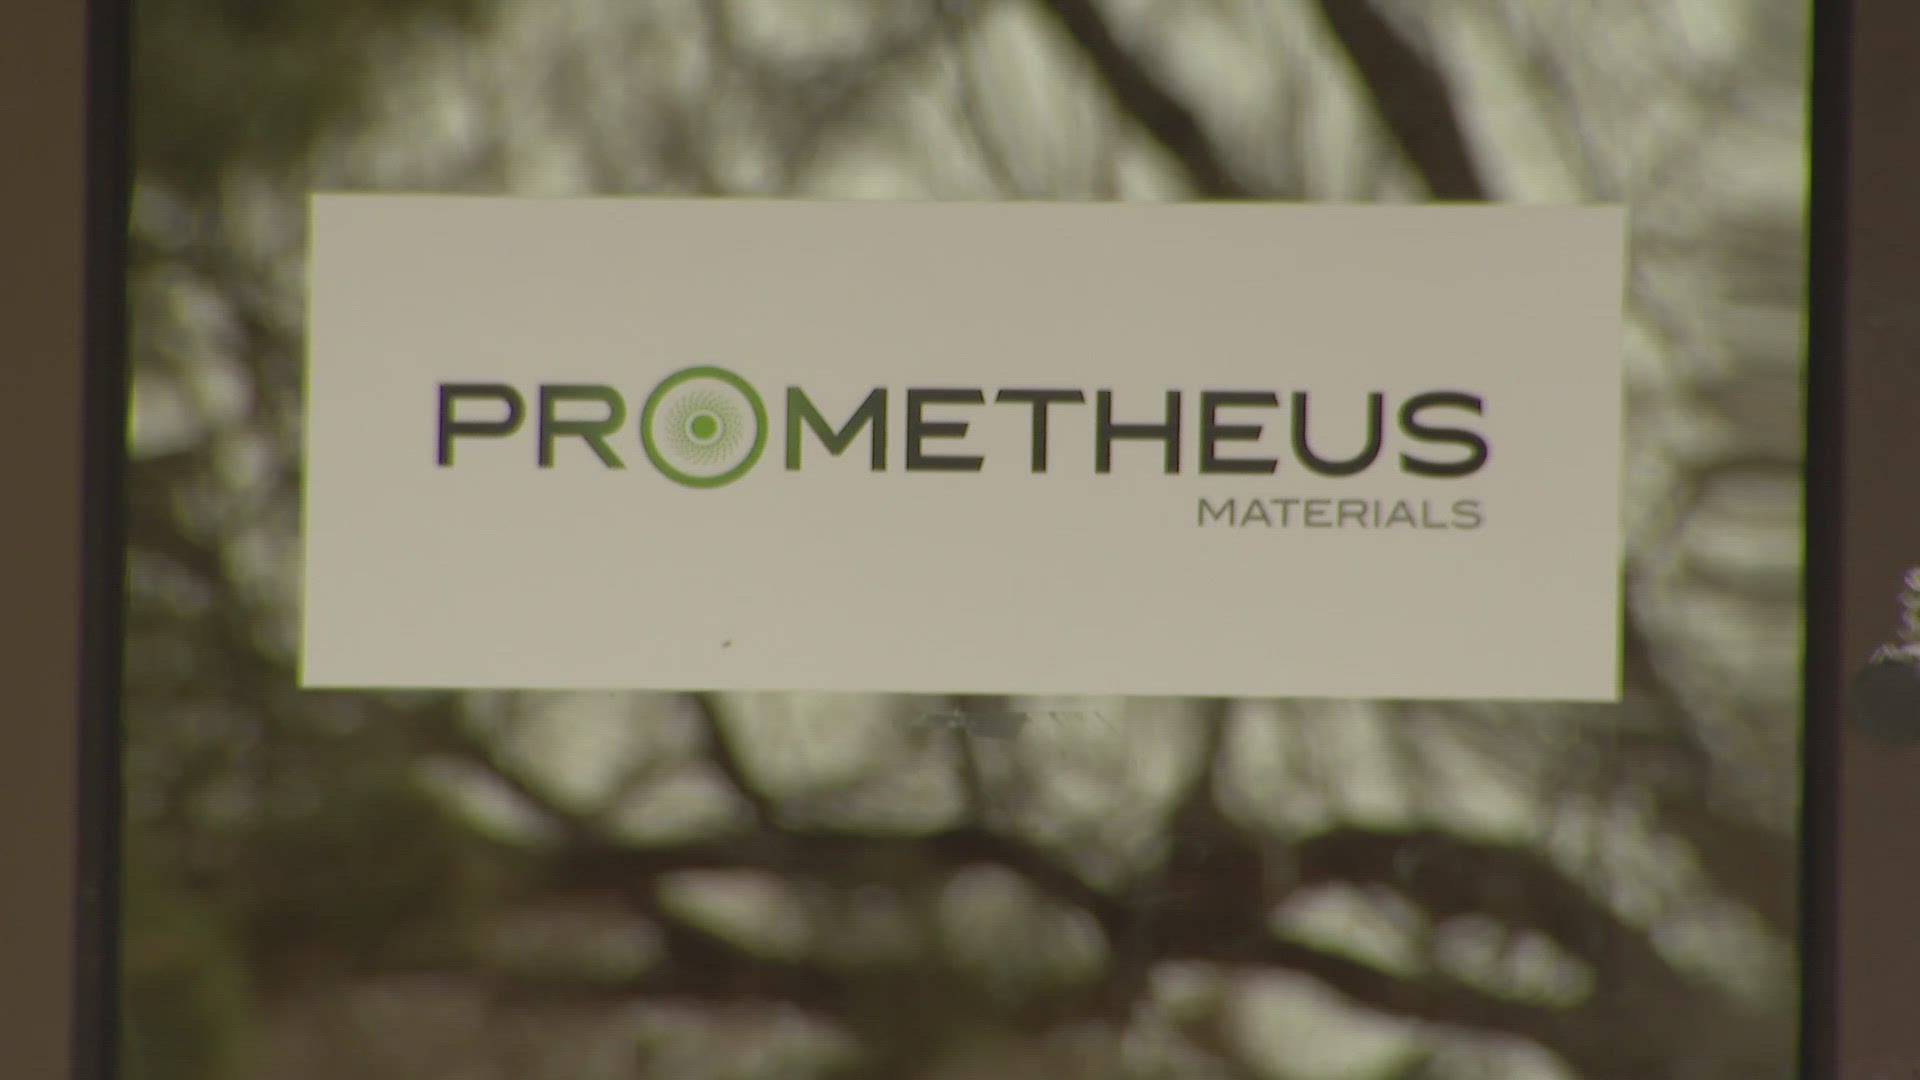 A Colorado company, Prometheus Materials, produces concrete that emits 90% less CO2 than traditional concrete.